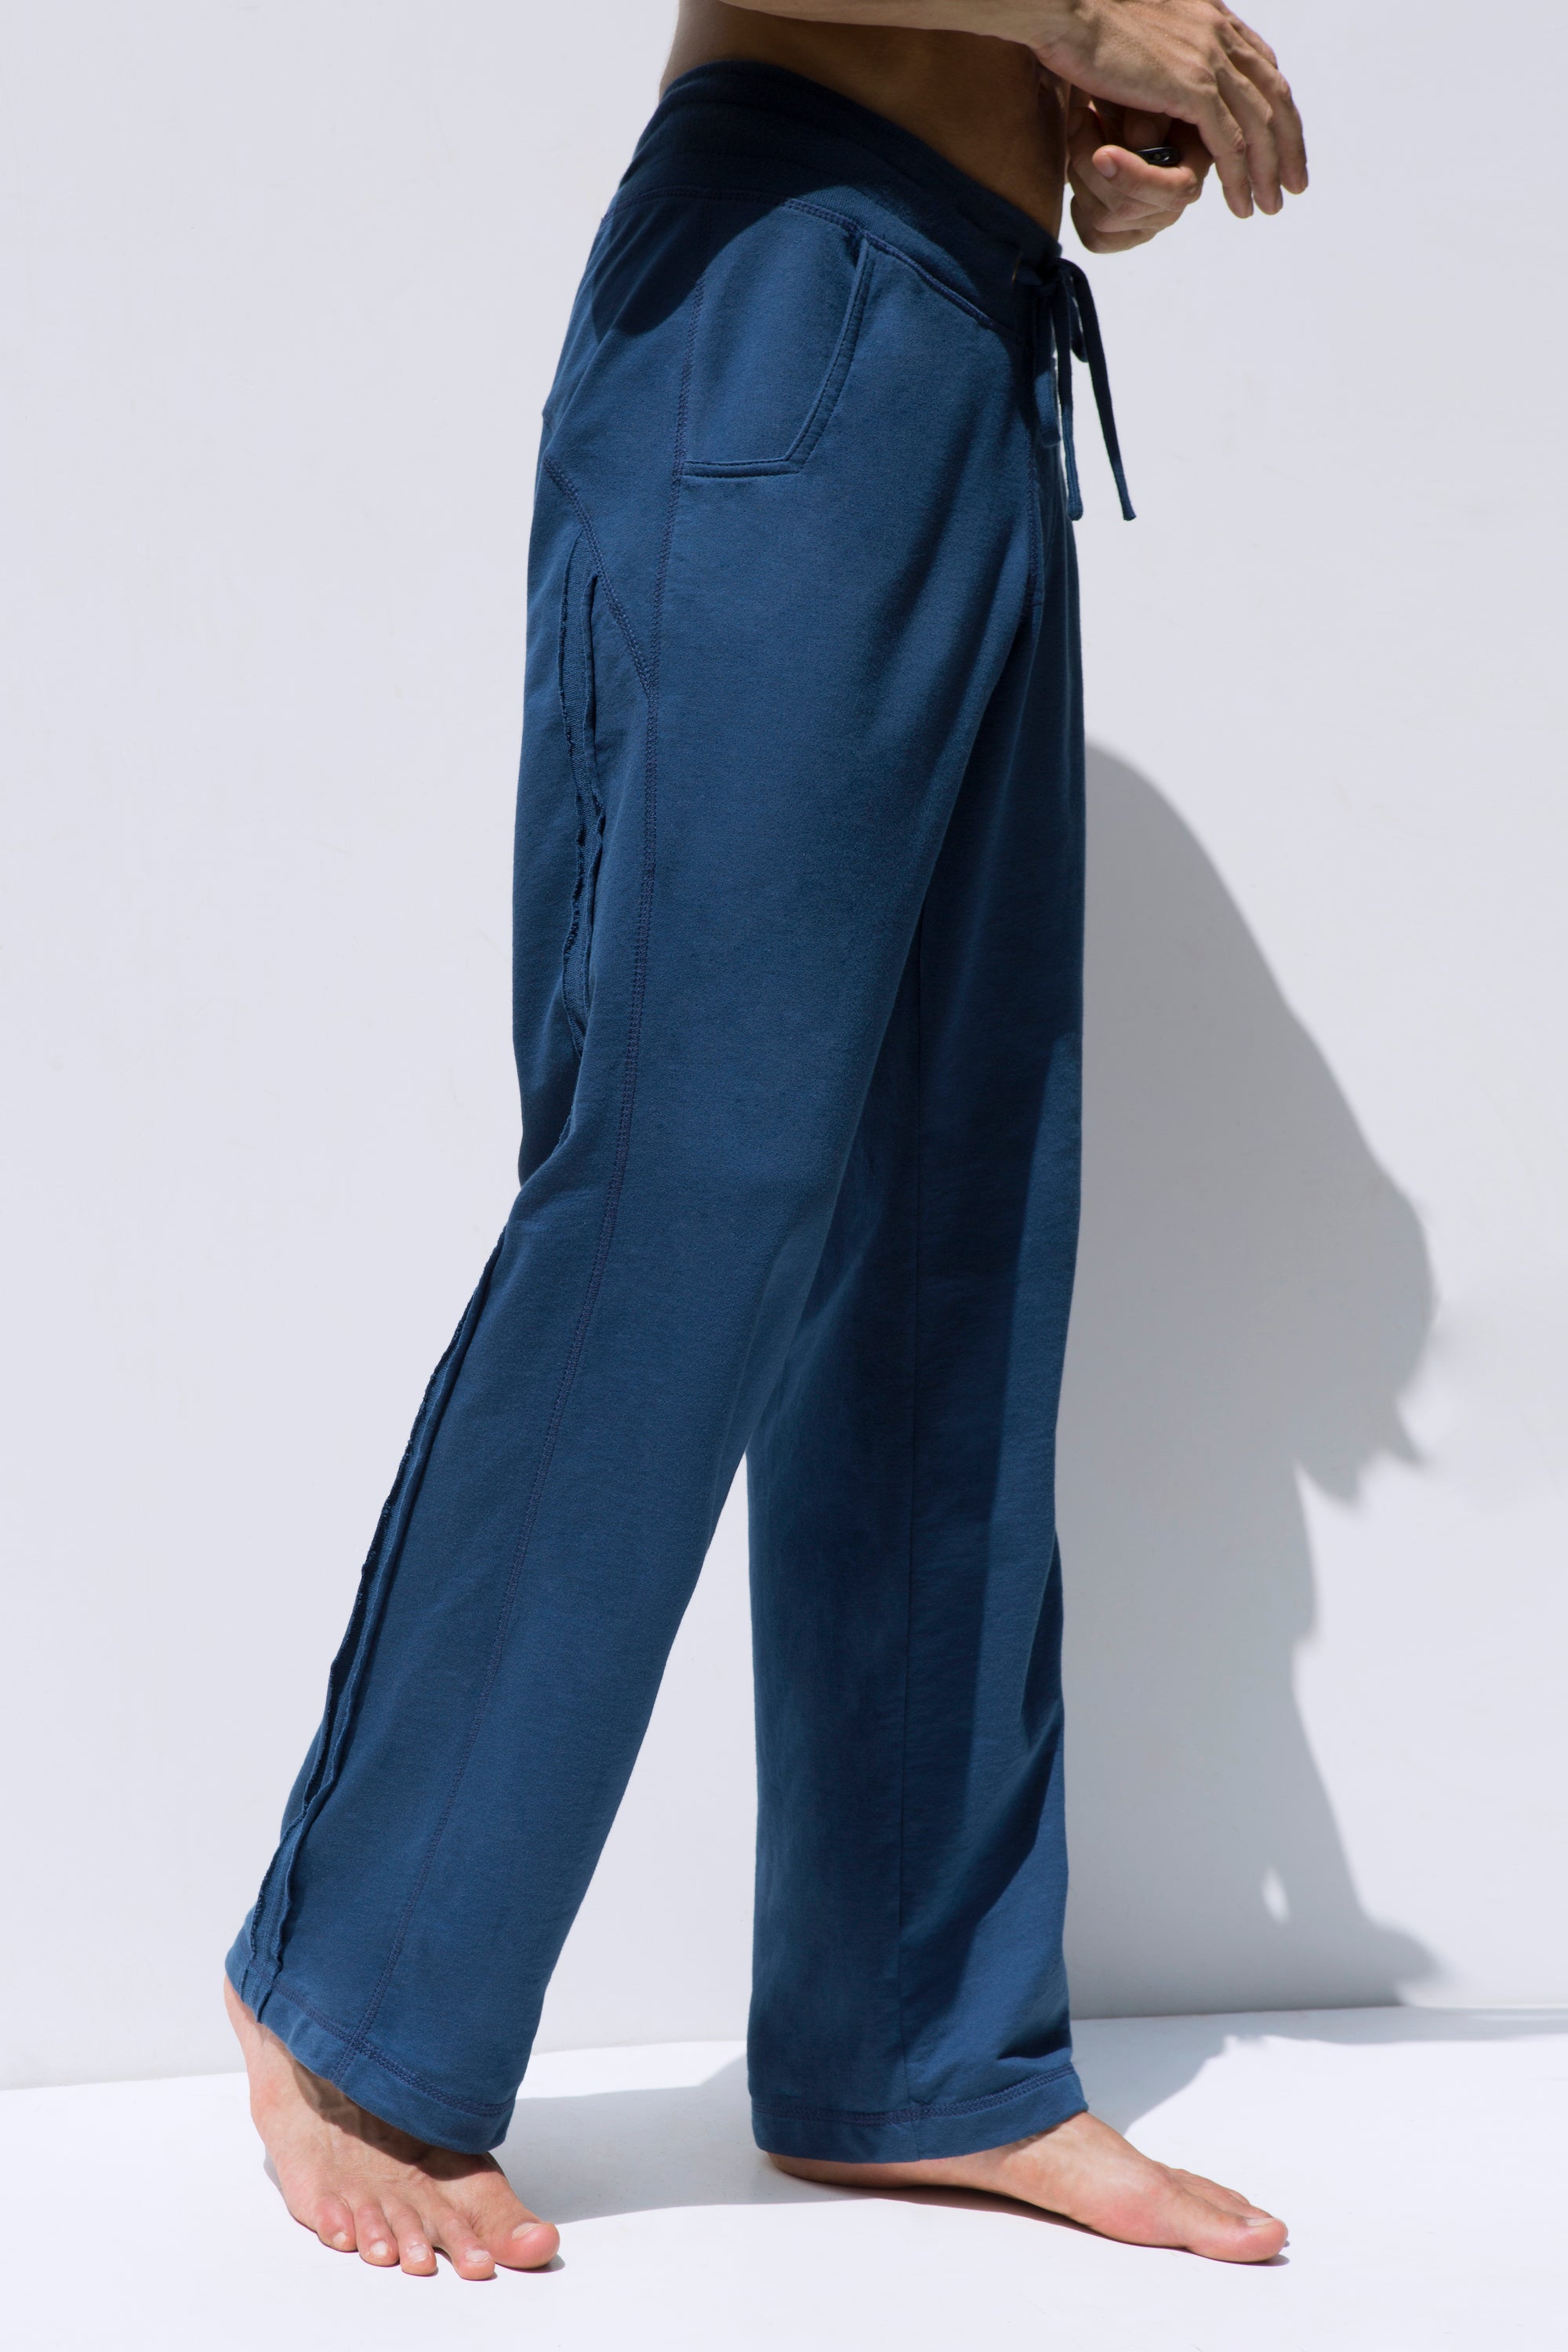 Mens Elastic Workout Pocket Trousers Casual Denim Jeans Jogger Pants  Sweatpants | eBay